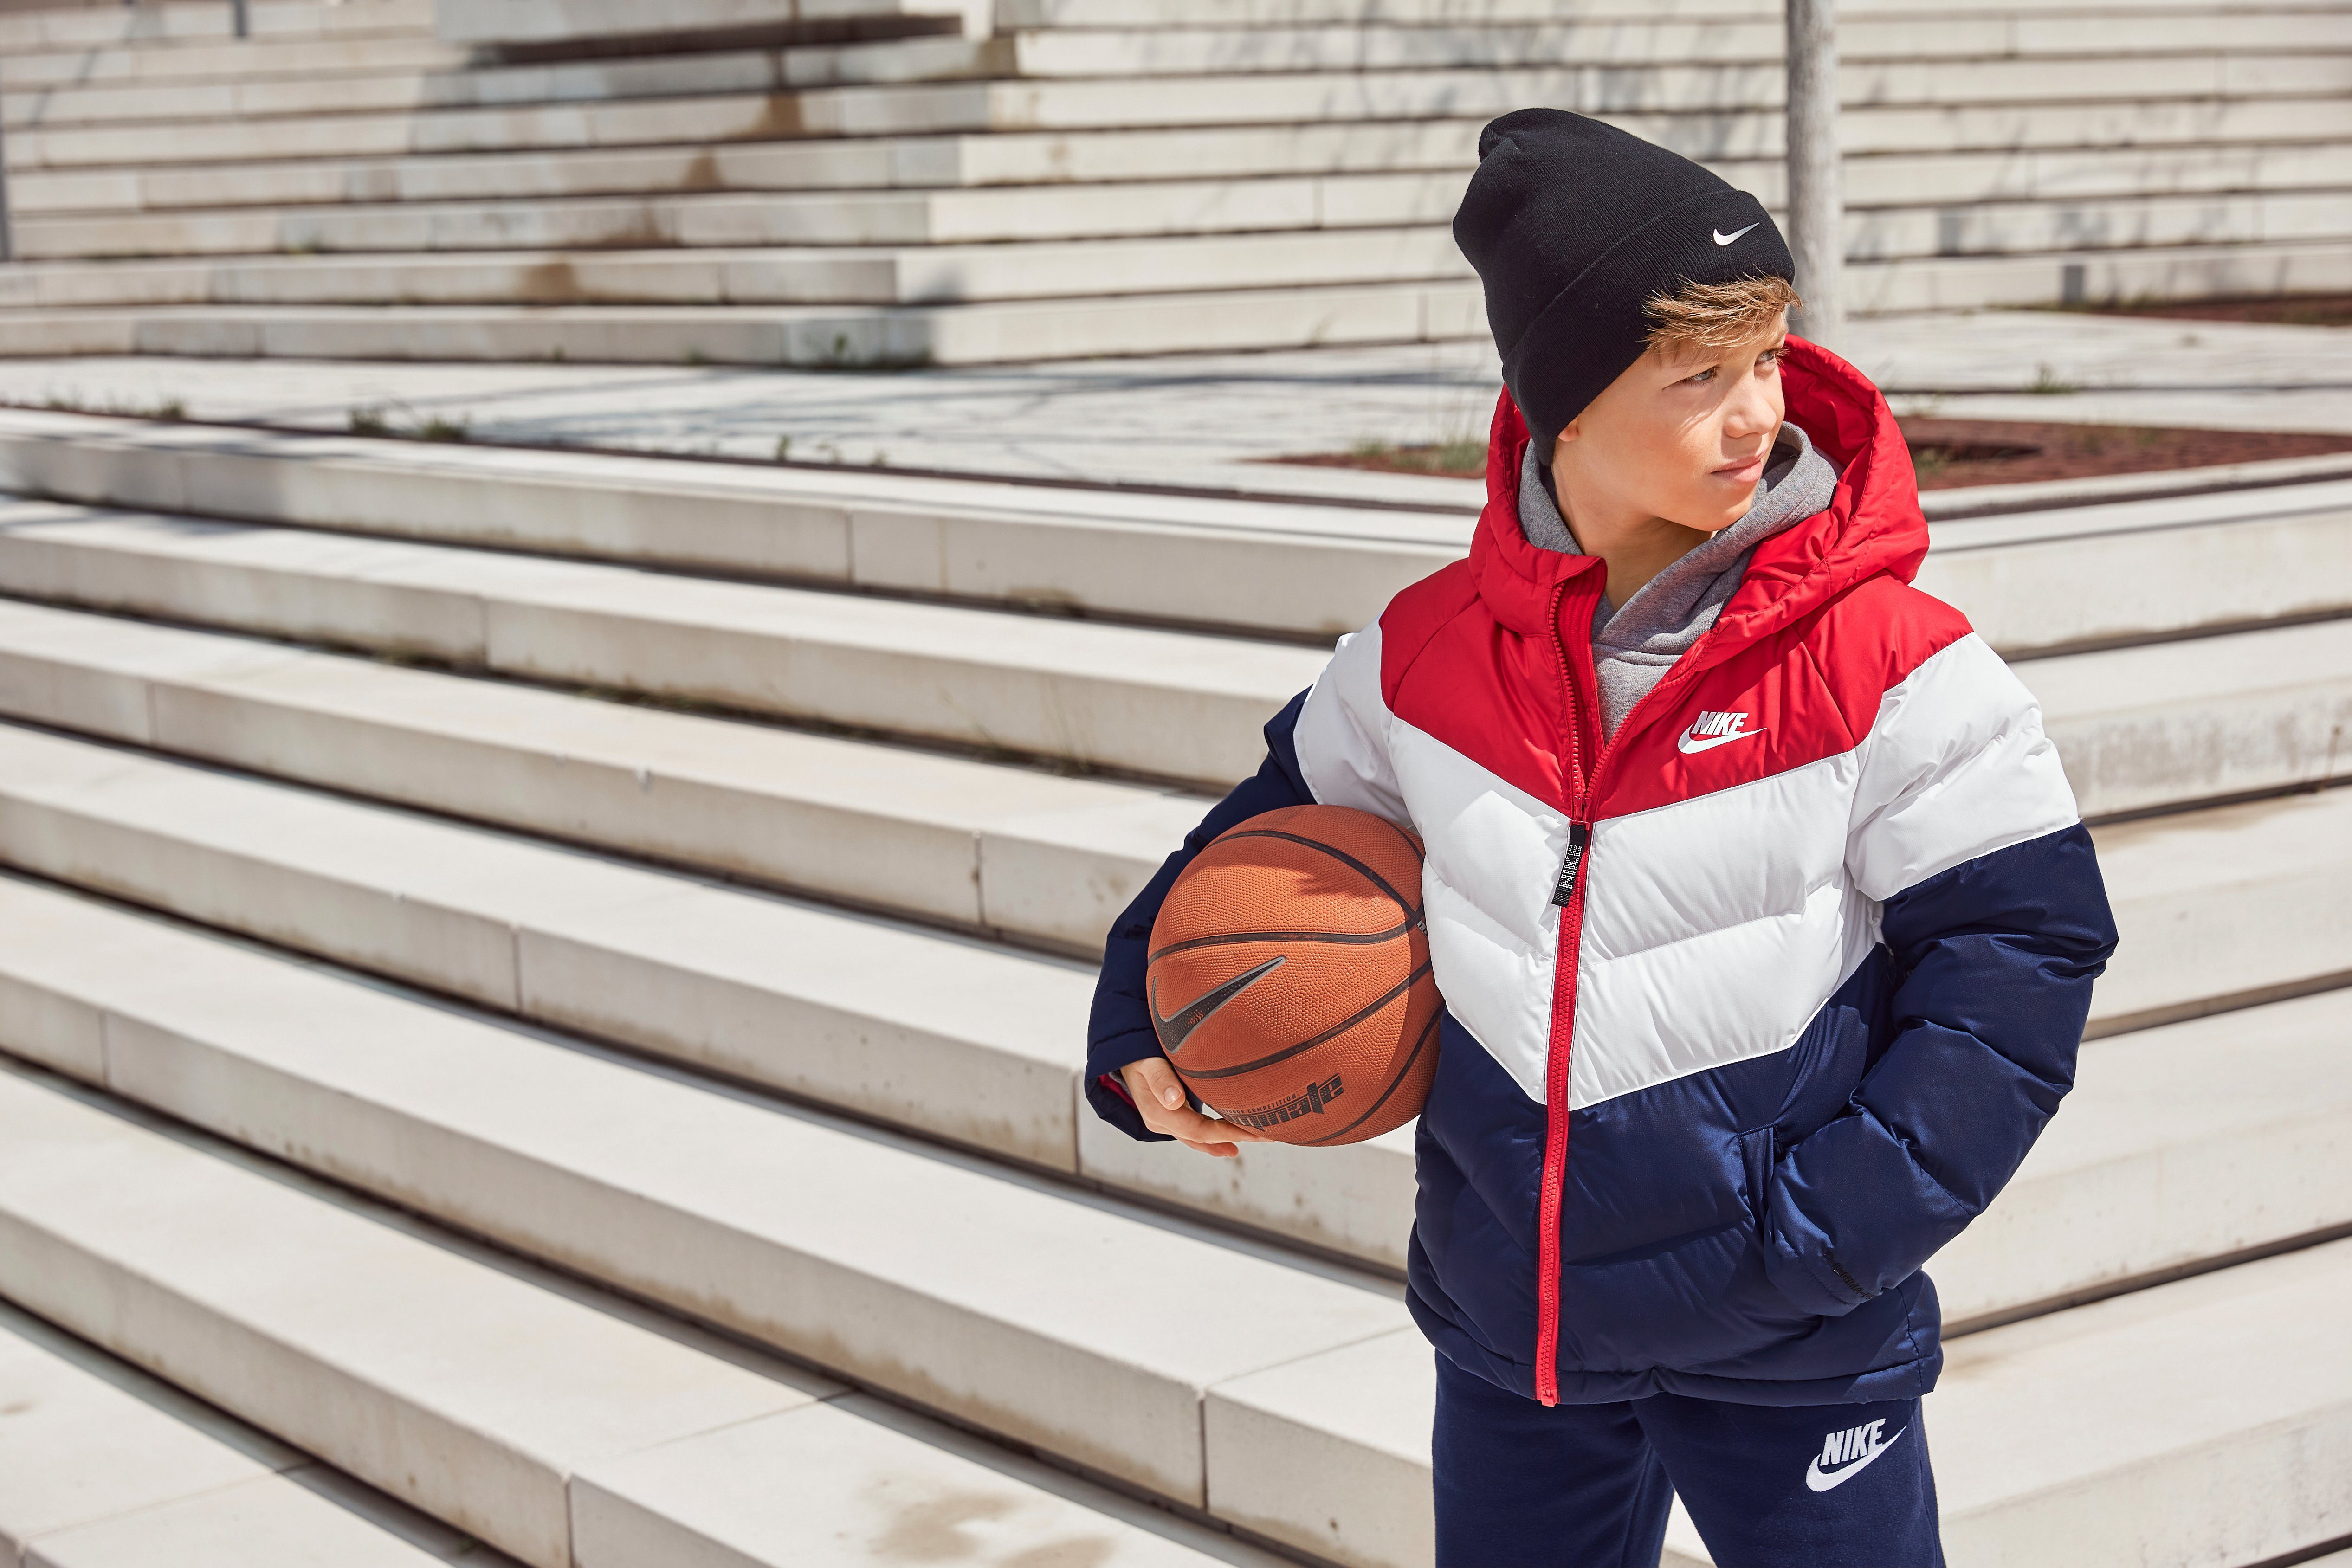 Nike Sportswear Baseball Cap »Kids' Beanie« kaufen | OTTO